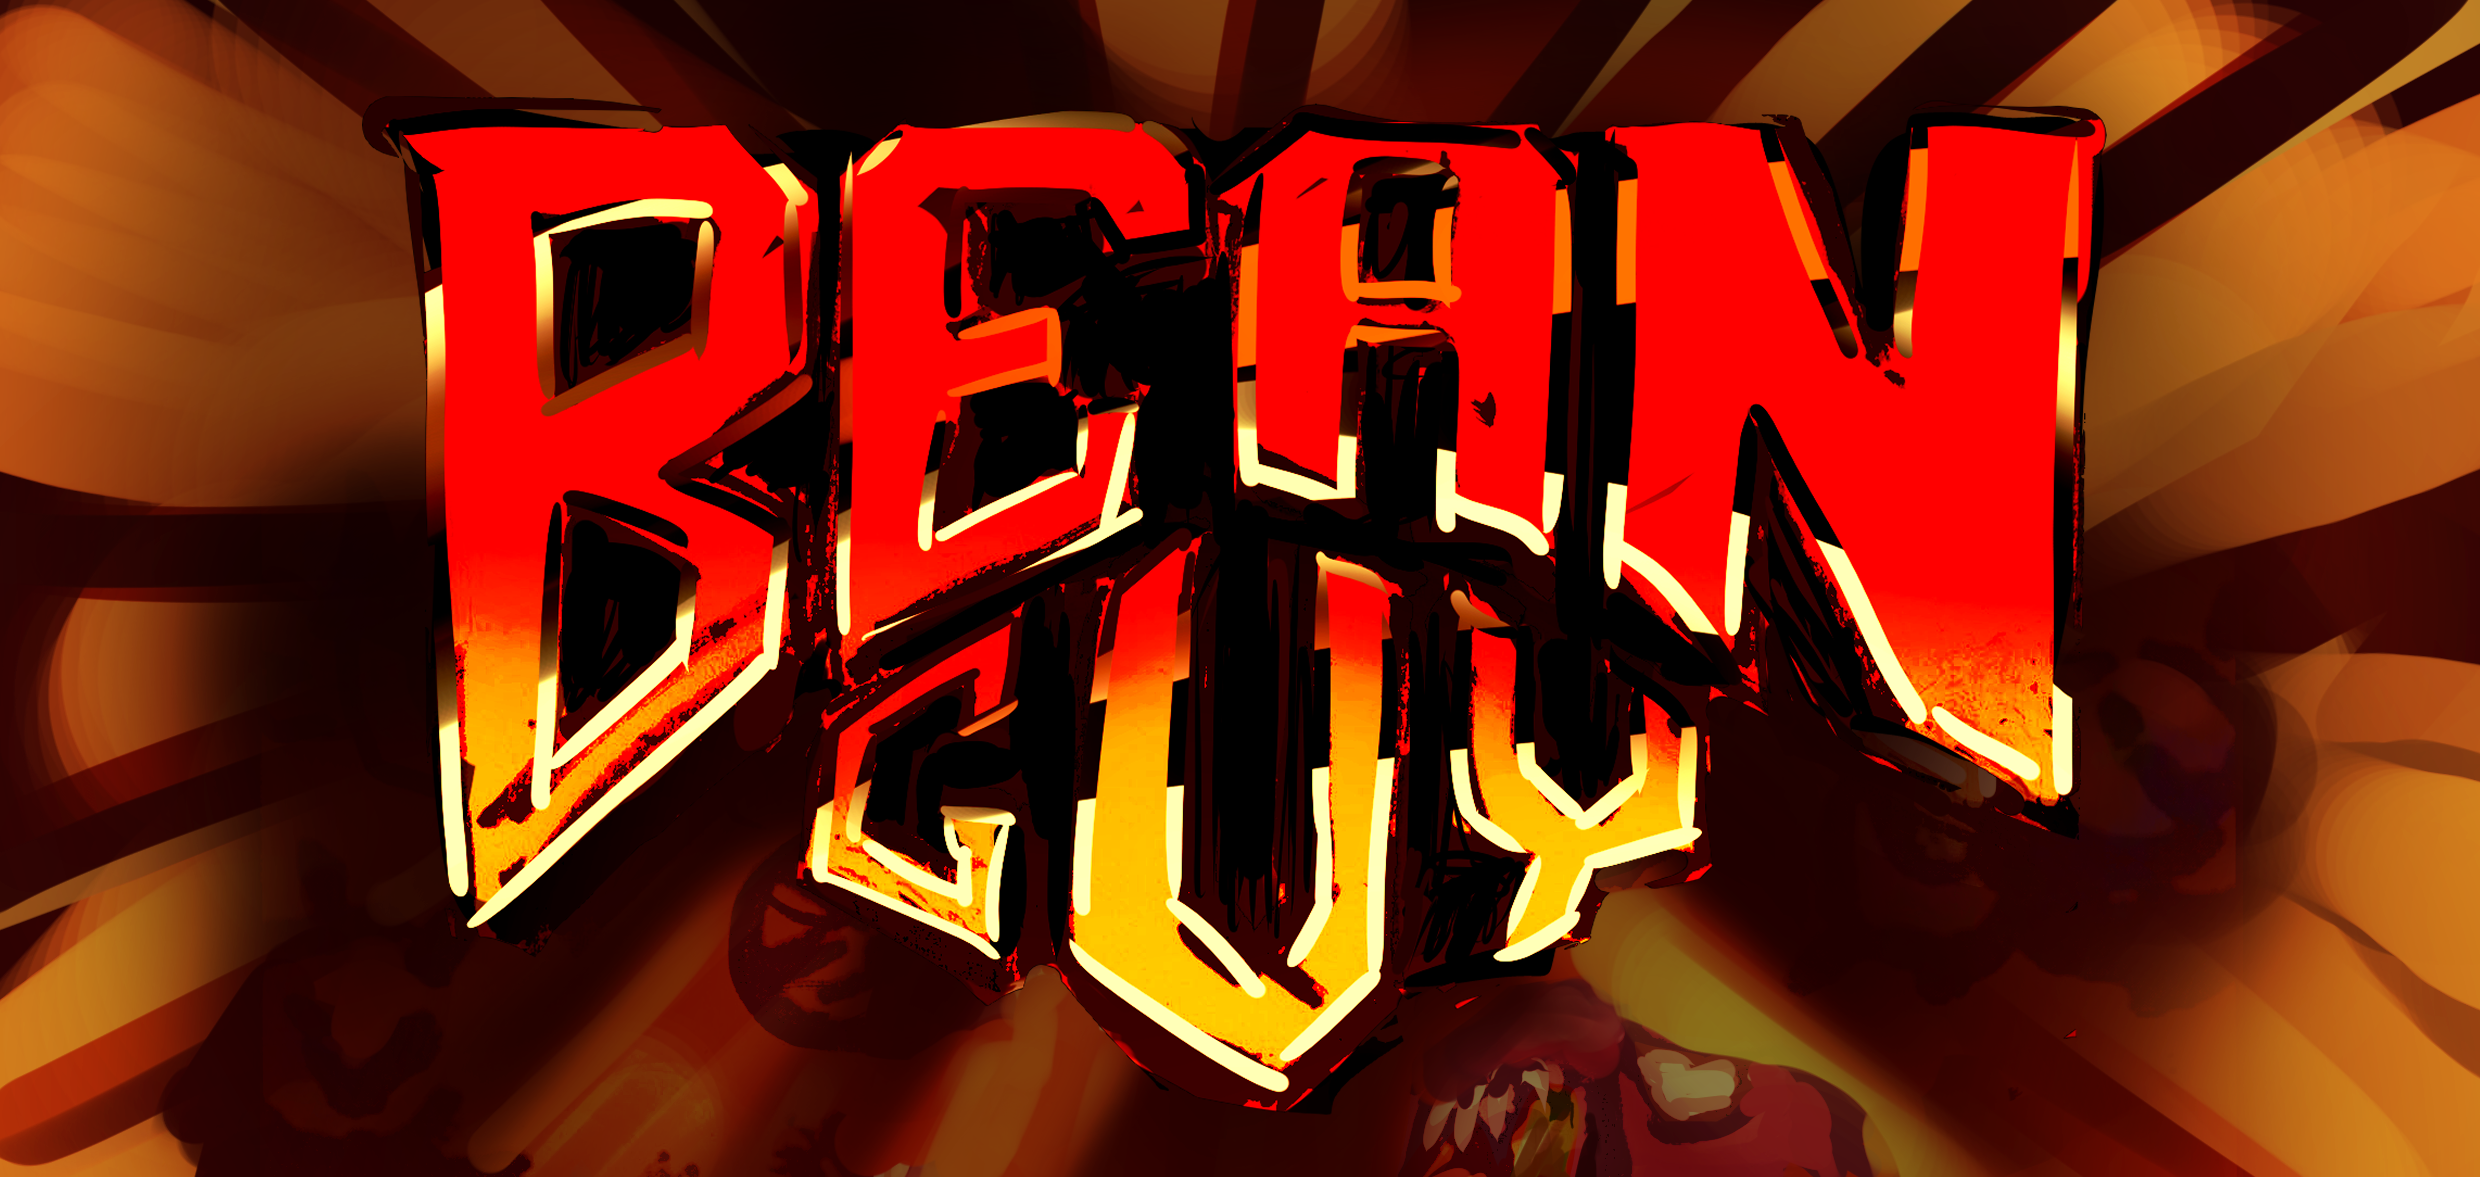 Bean Guy